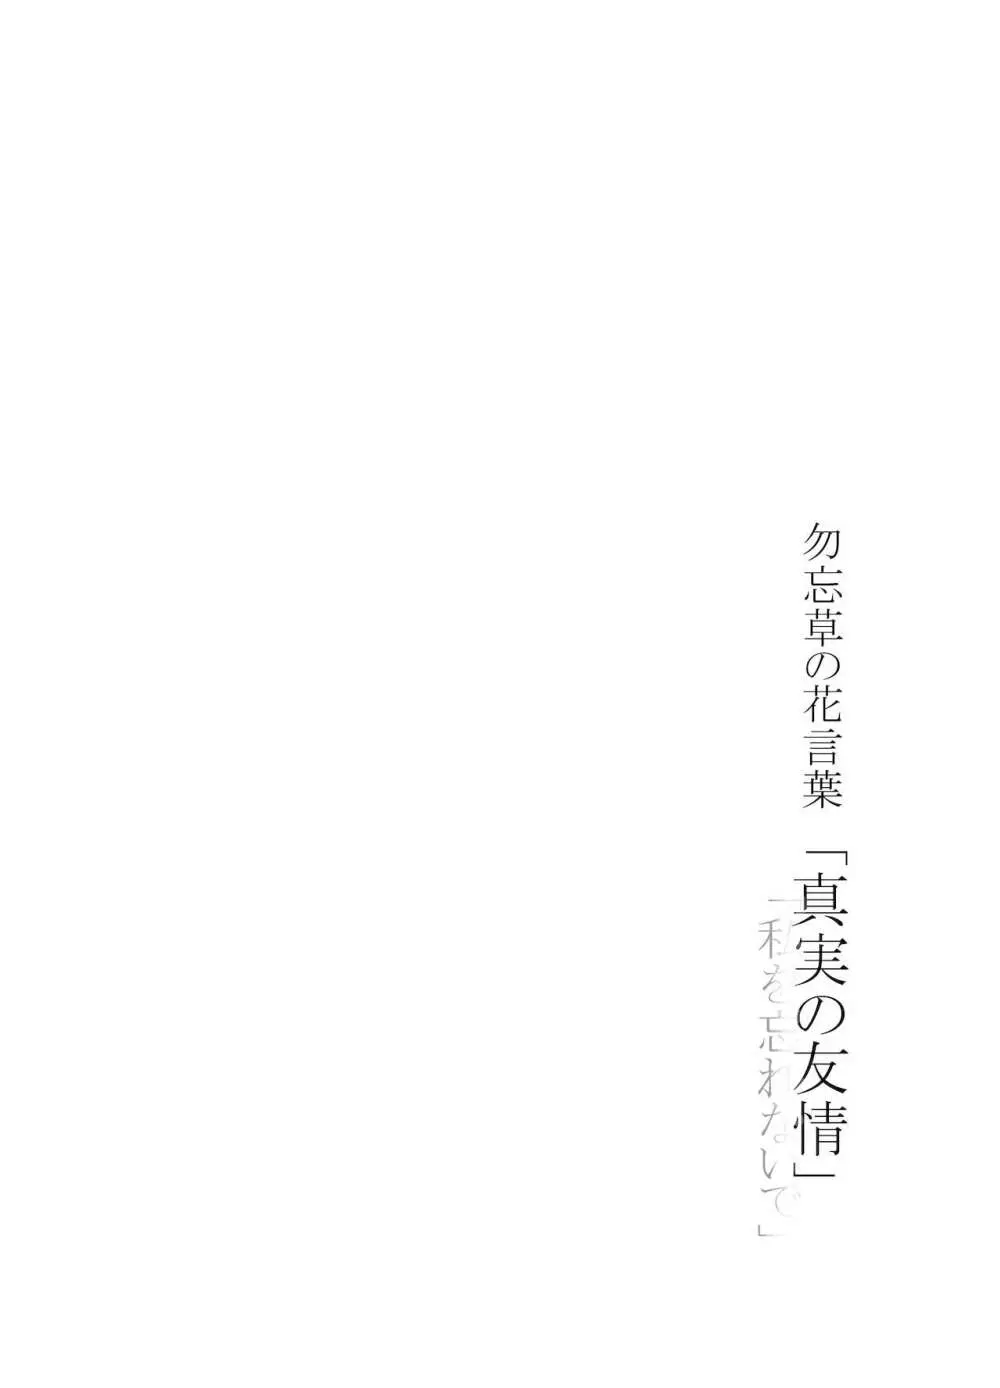 Hifumi (Hifumi) [Hitori ansoro] rēzondētoru wa koko ni arite [man guda ♀] [zenpen] (fate grand order ) 2ページ